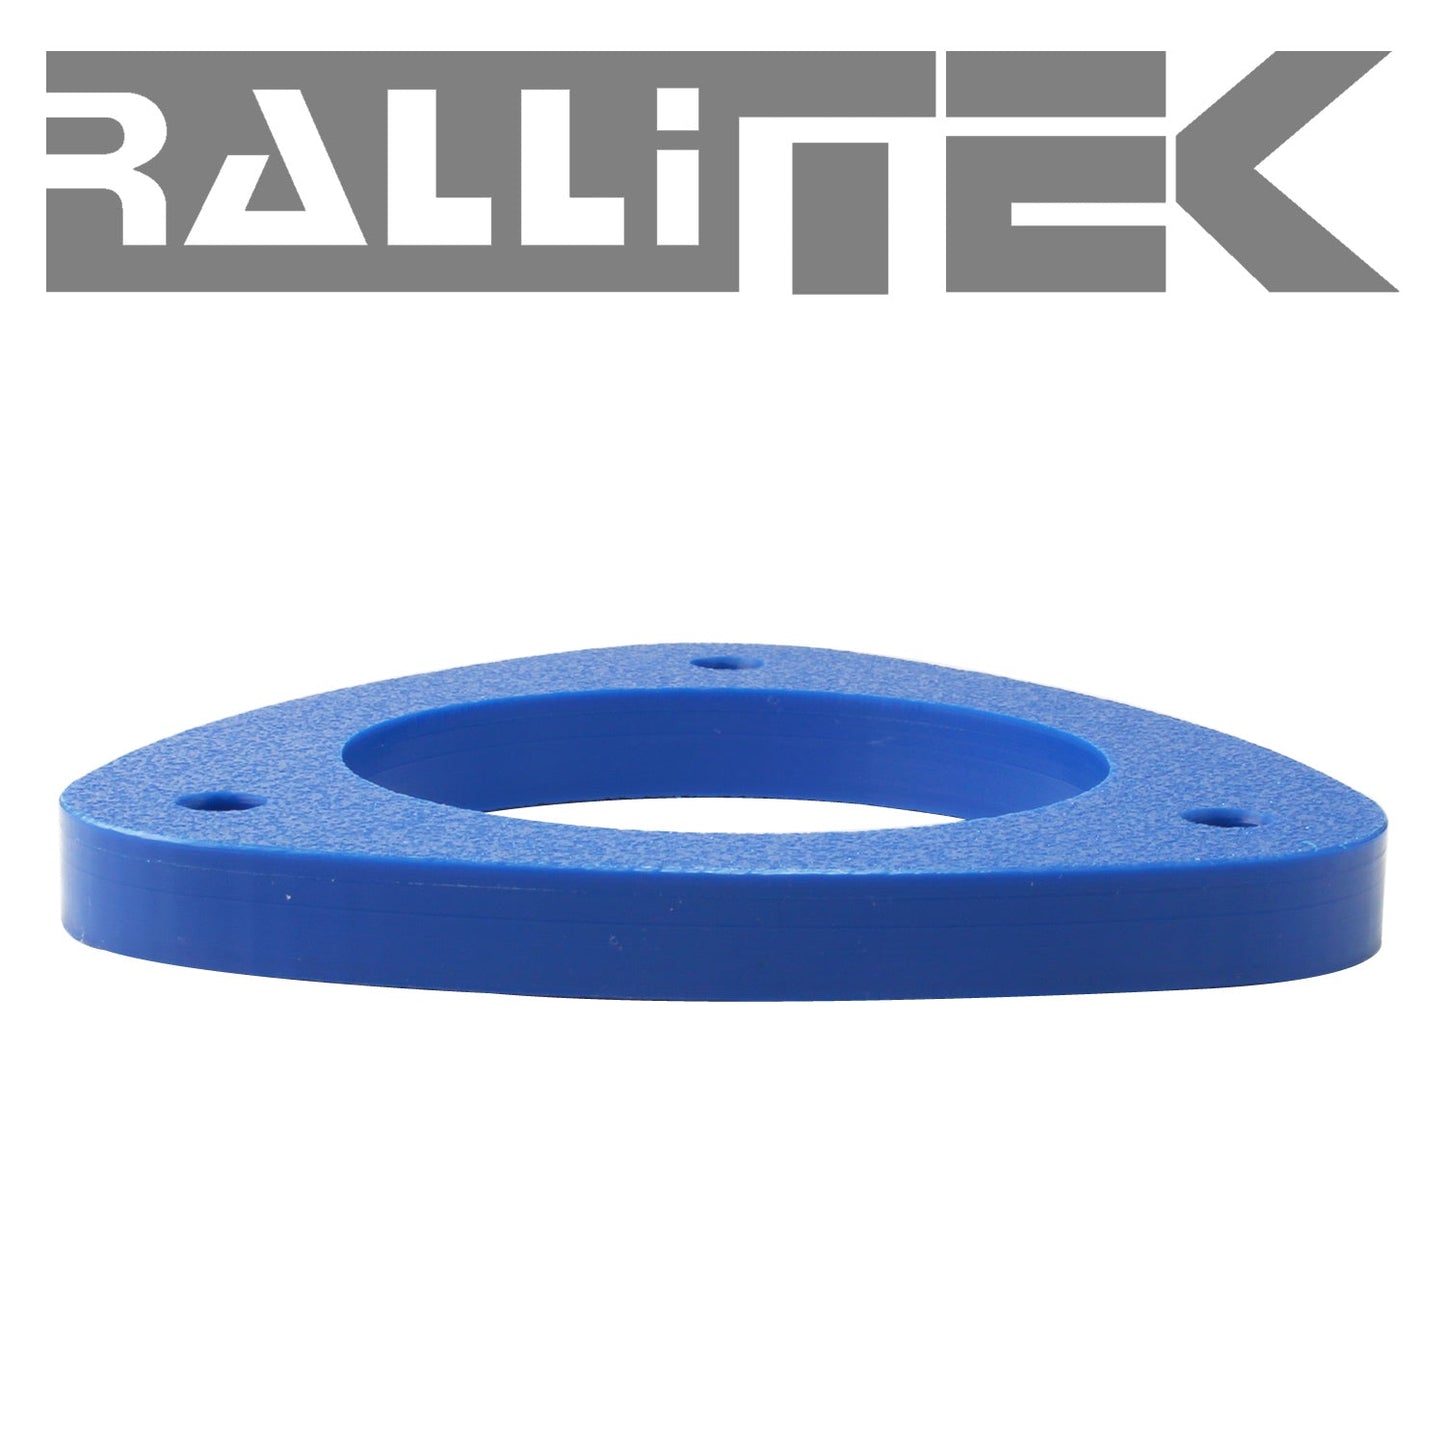 RalliTEK 0.5" Rear Lift Kit Spacers - Impreza 1993-2001 / Legacy 1989-1994